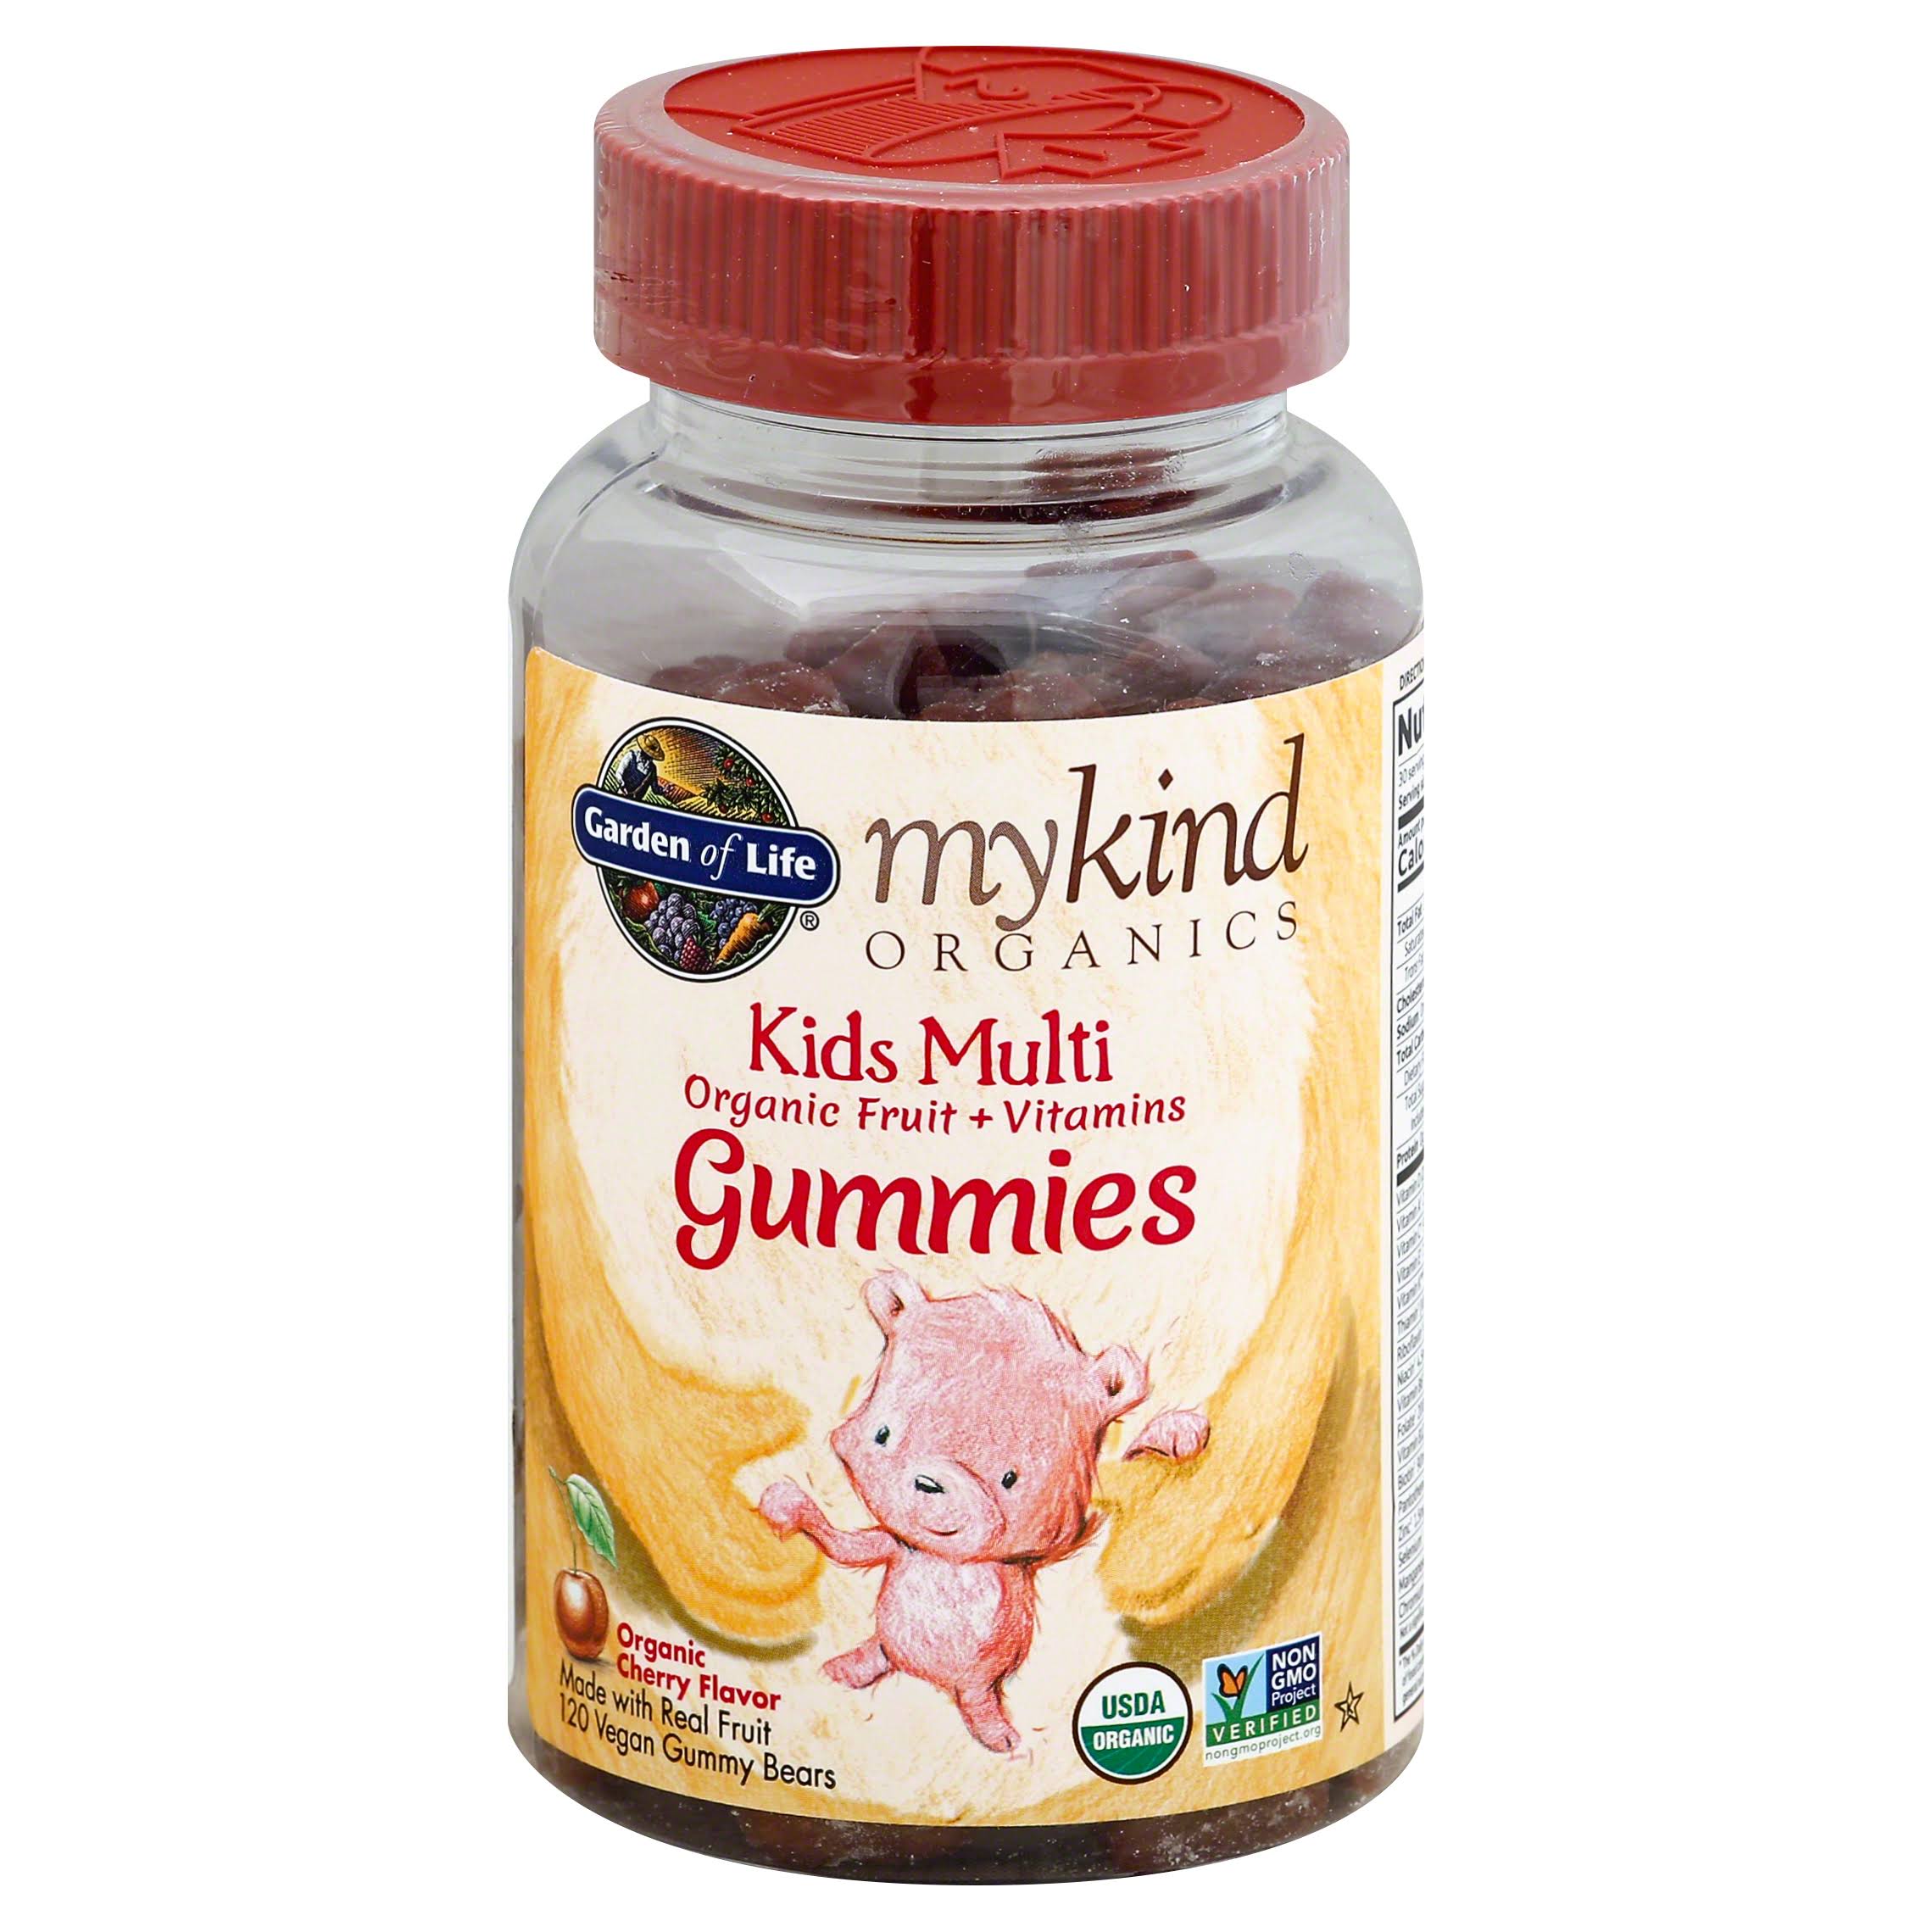 Garden of Life Mykind Organics Kids Multi Gummies Vitamins - Cherry, 120ct